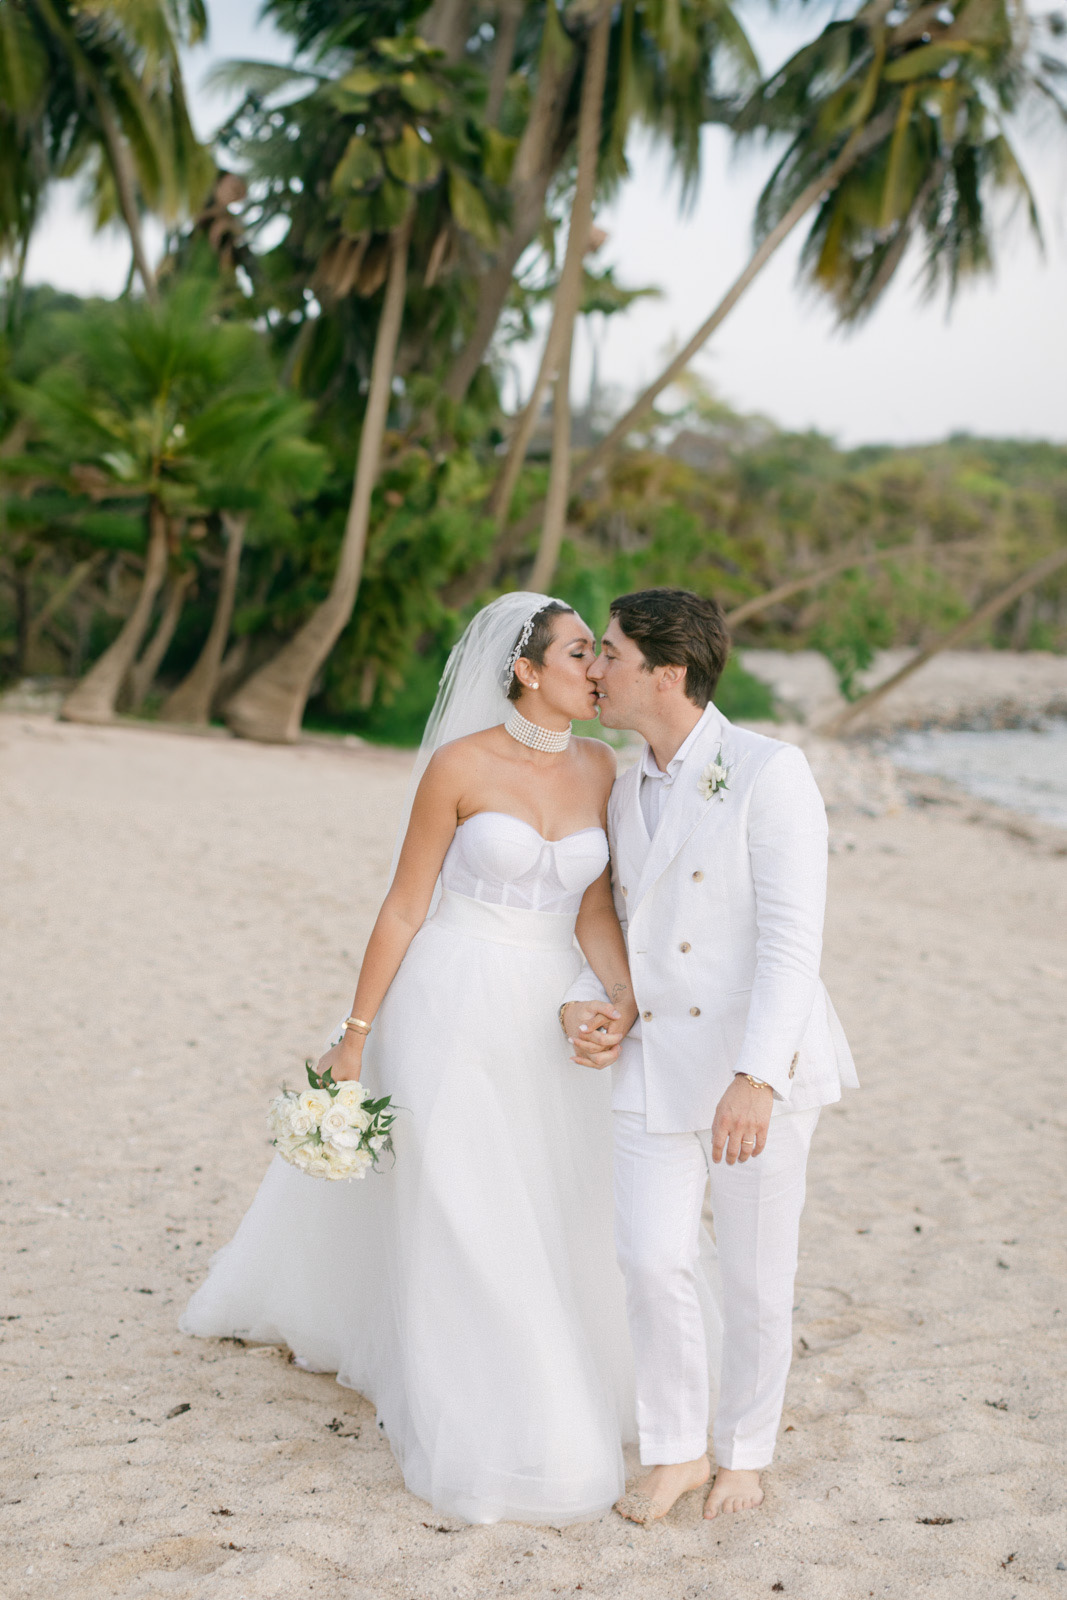 St Barts Beach Wedding: Couple's kiss under palm trees